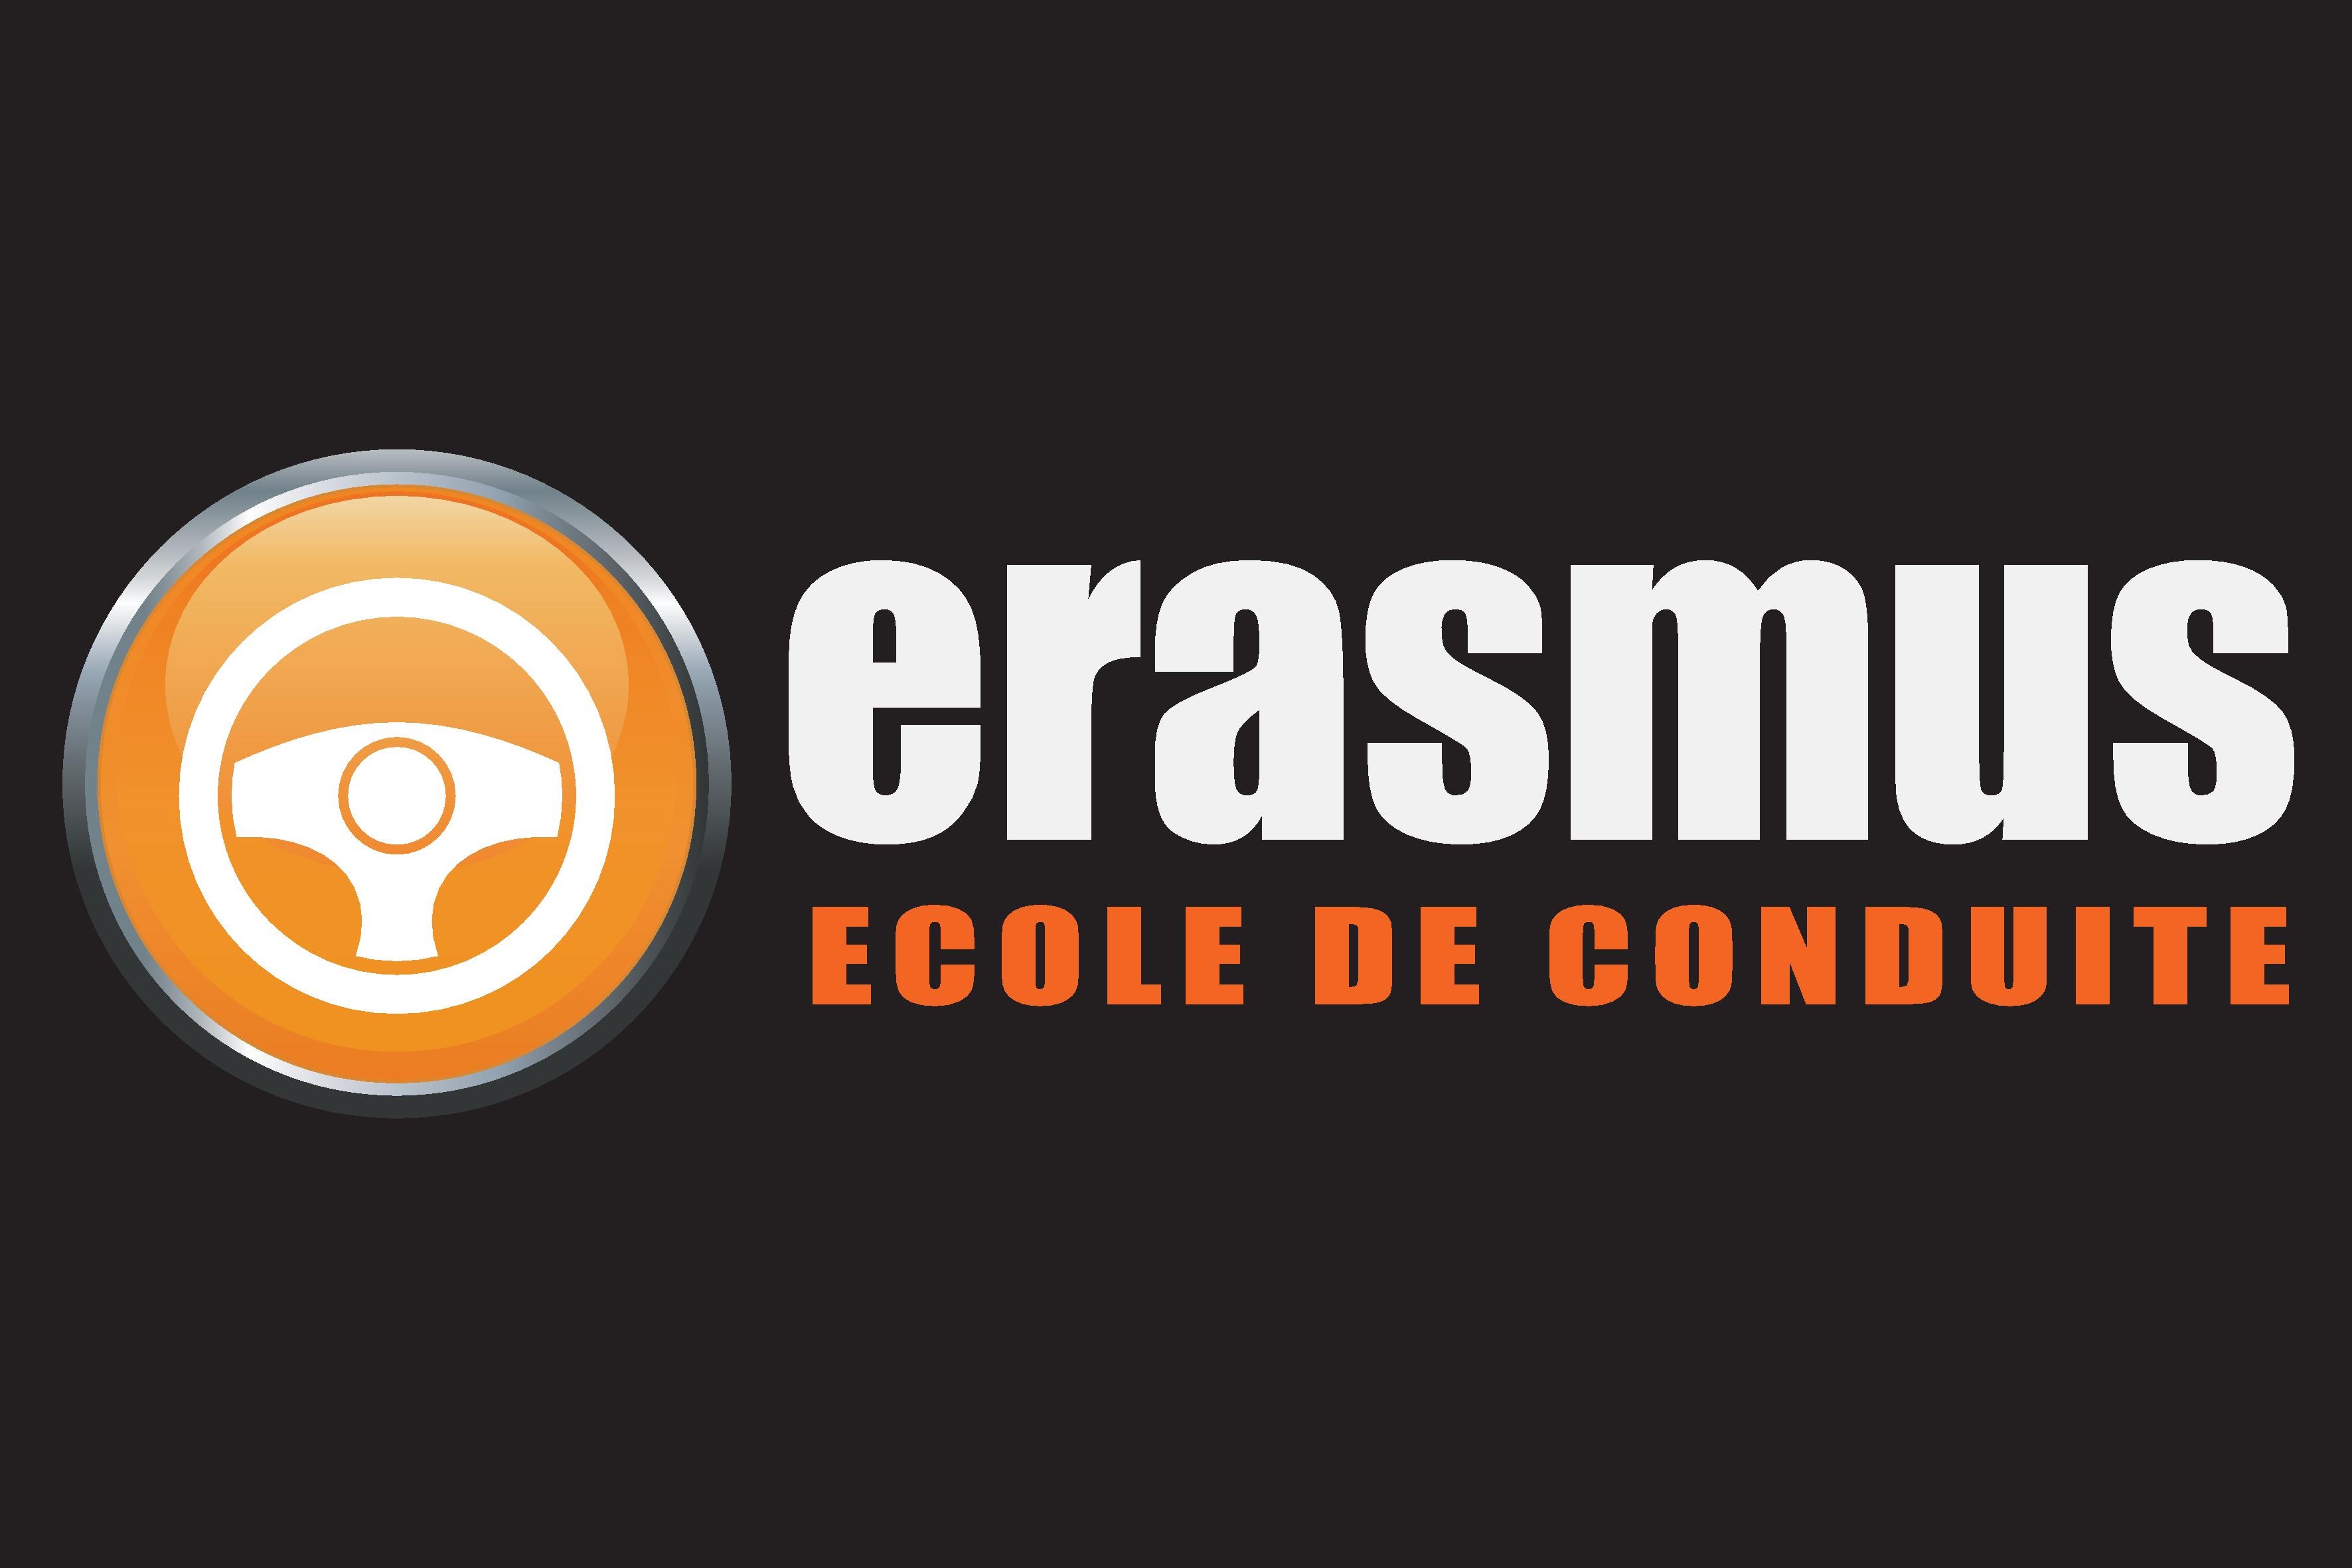 Erasmus école de conduite